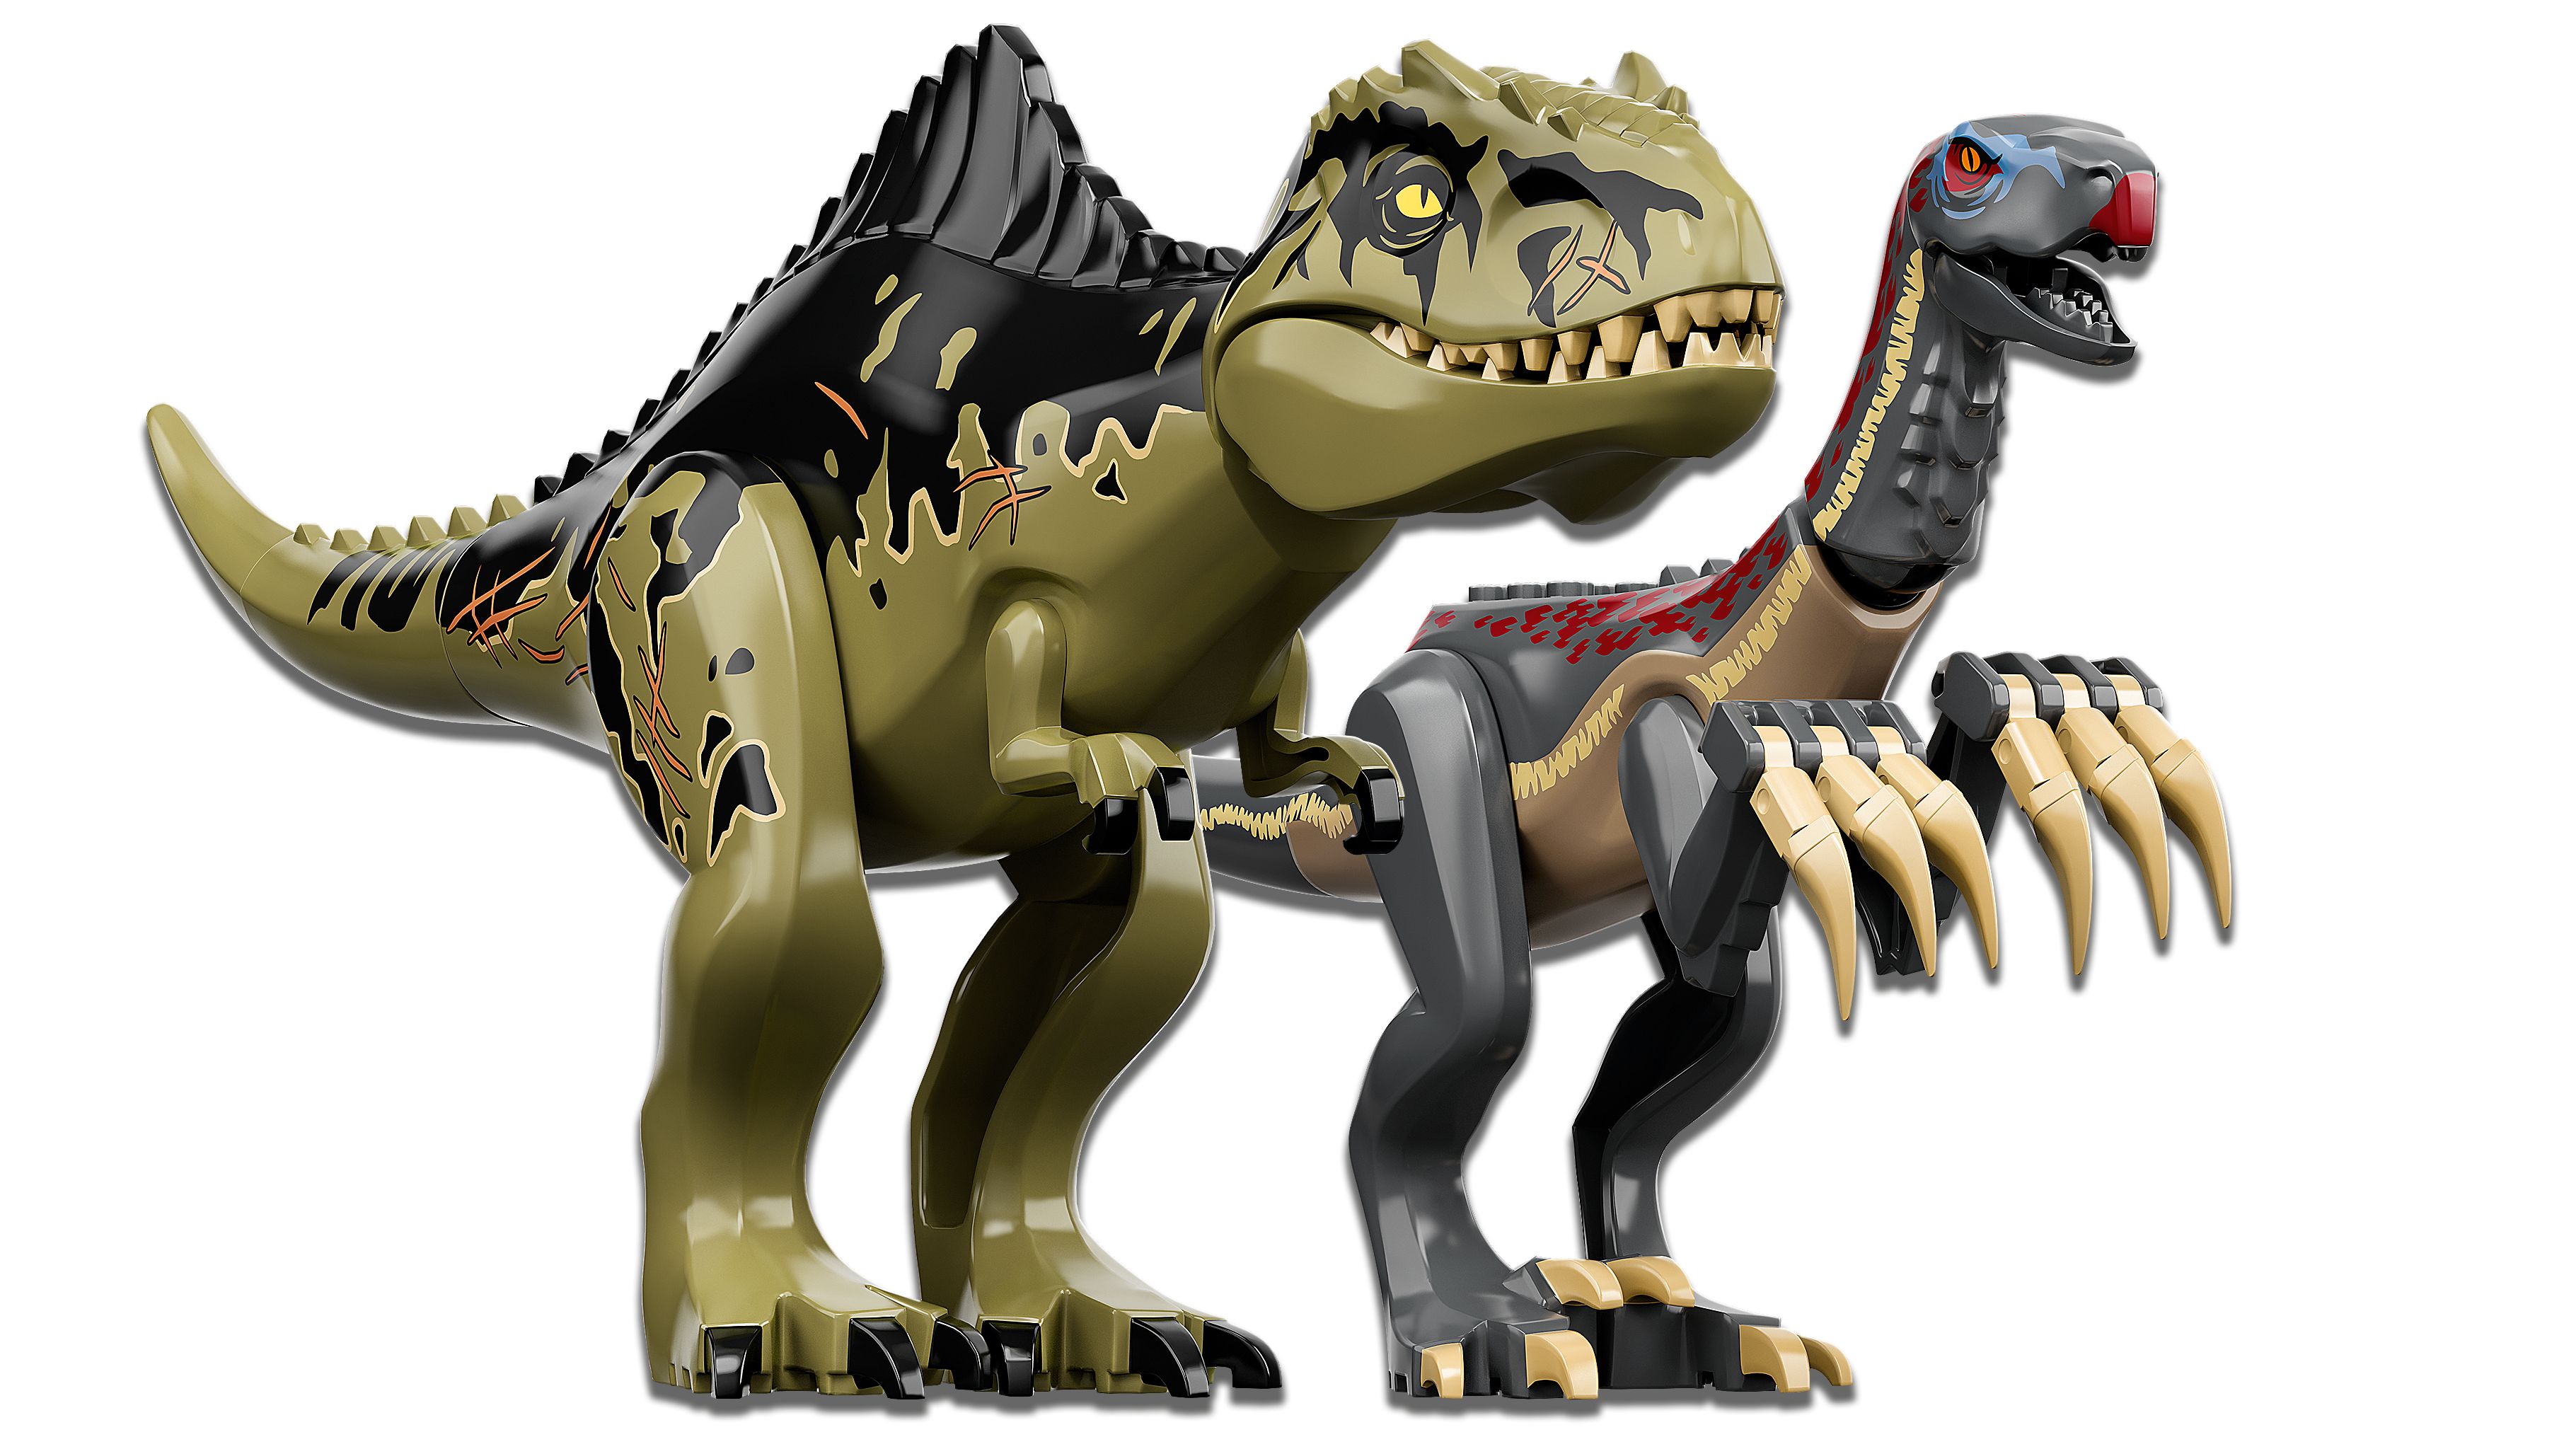 The biggest Lego Jurassic World Dominion set has the first ever Giganotosaurus figure